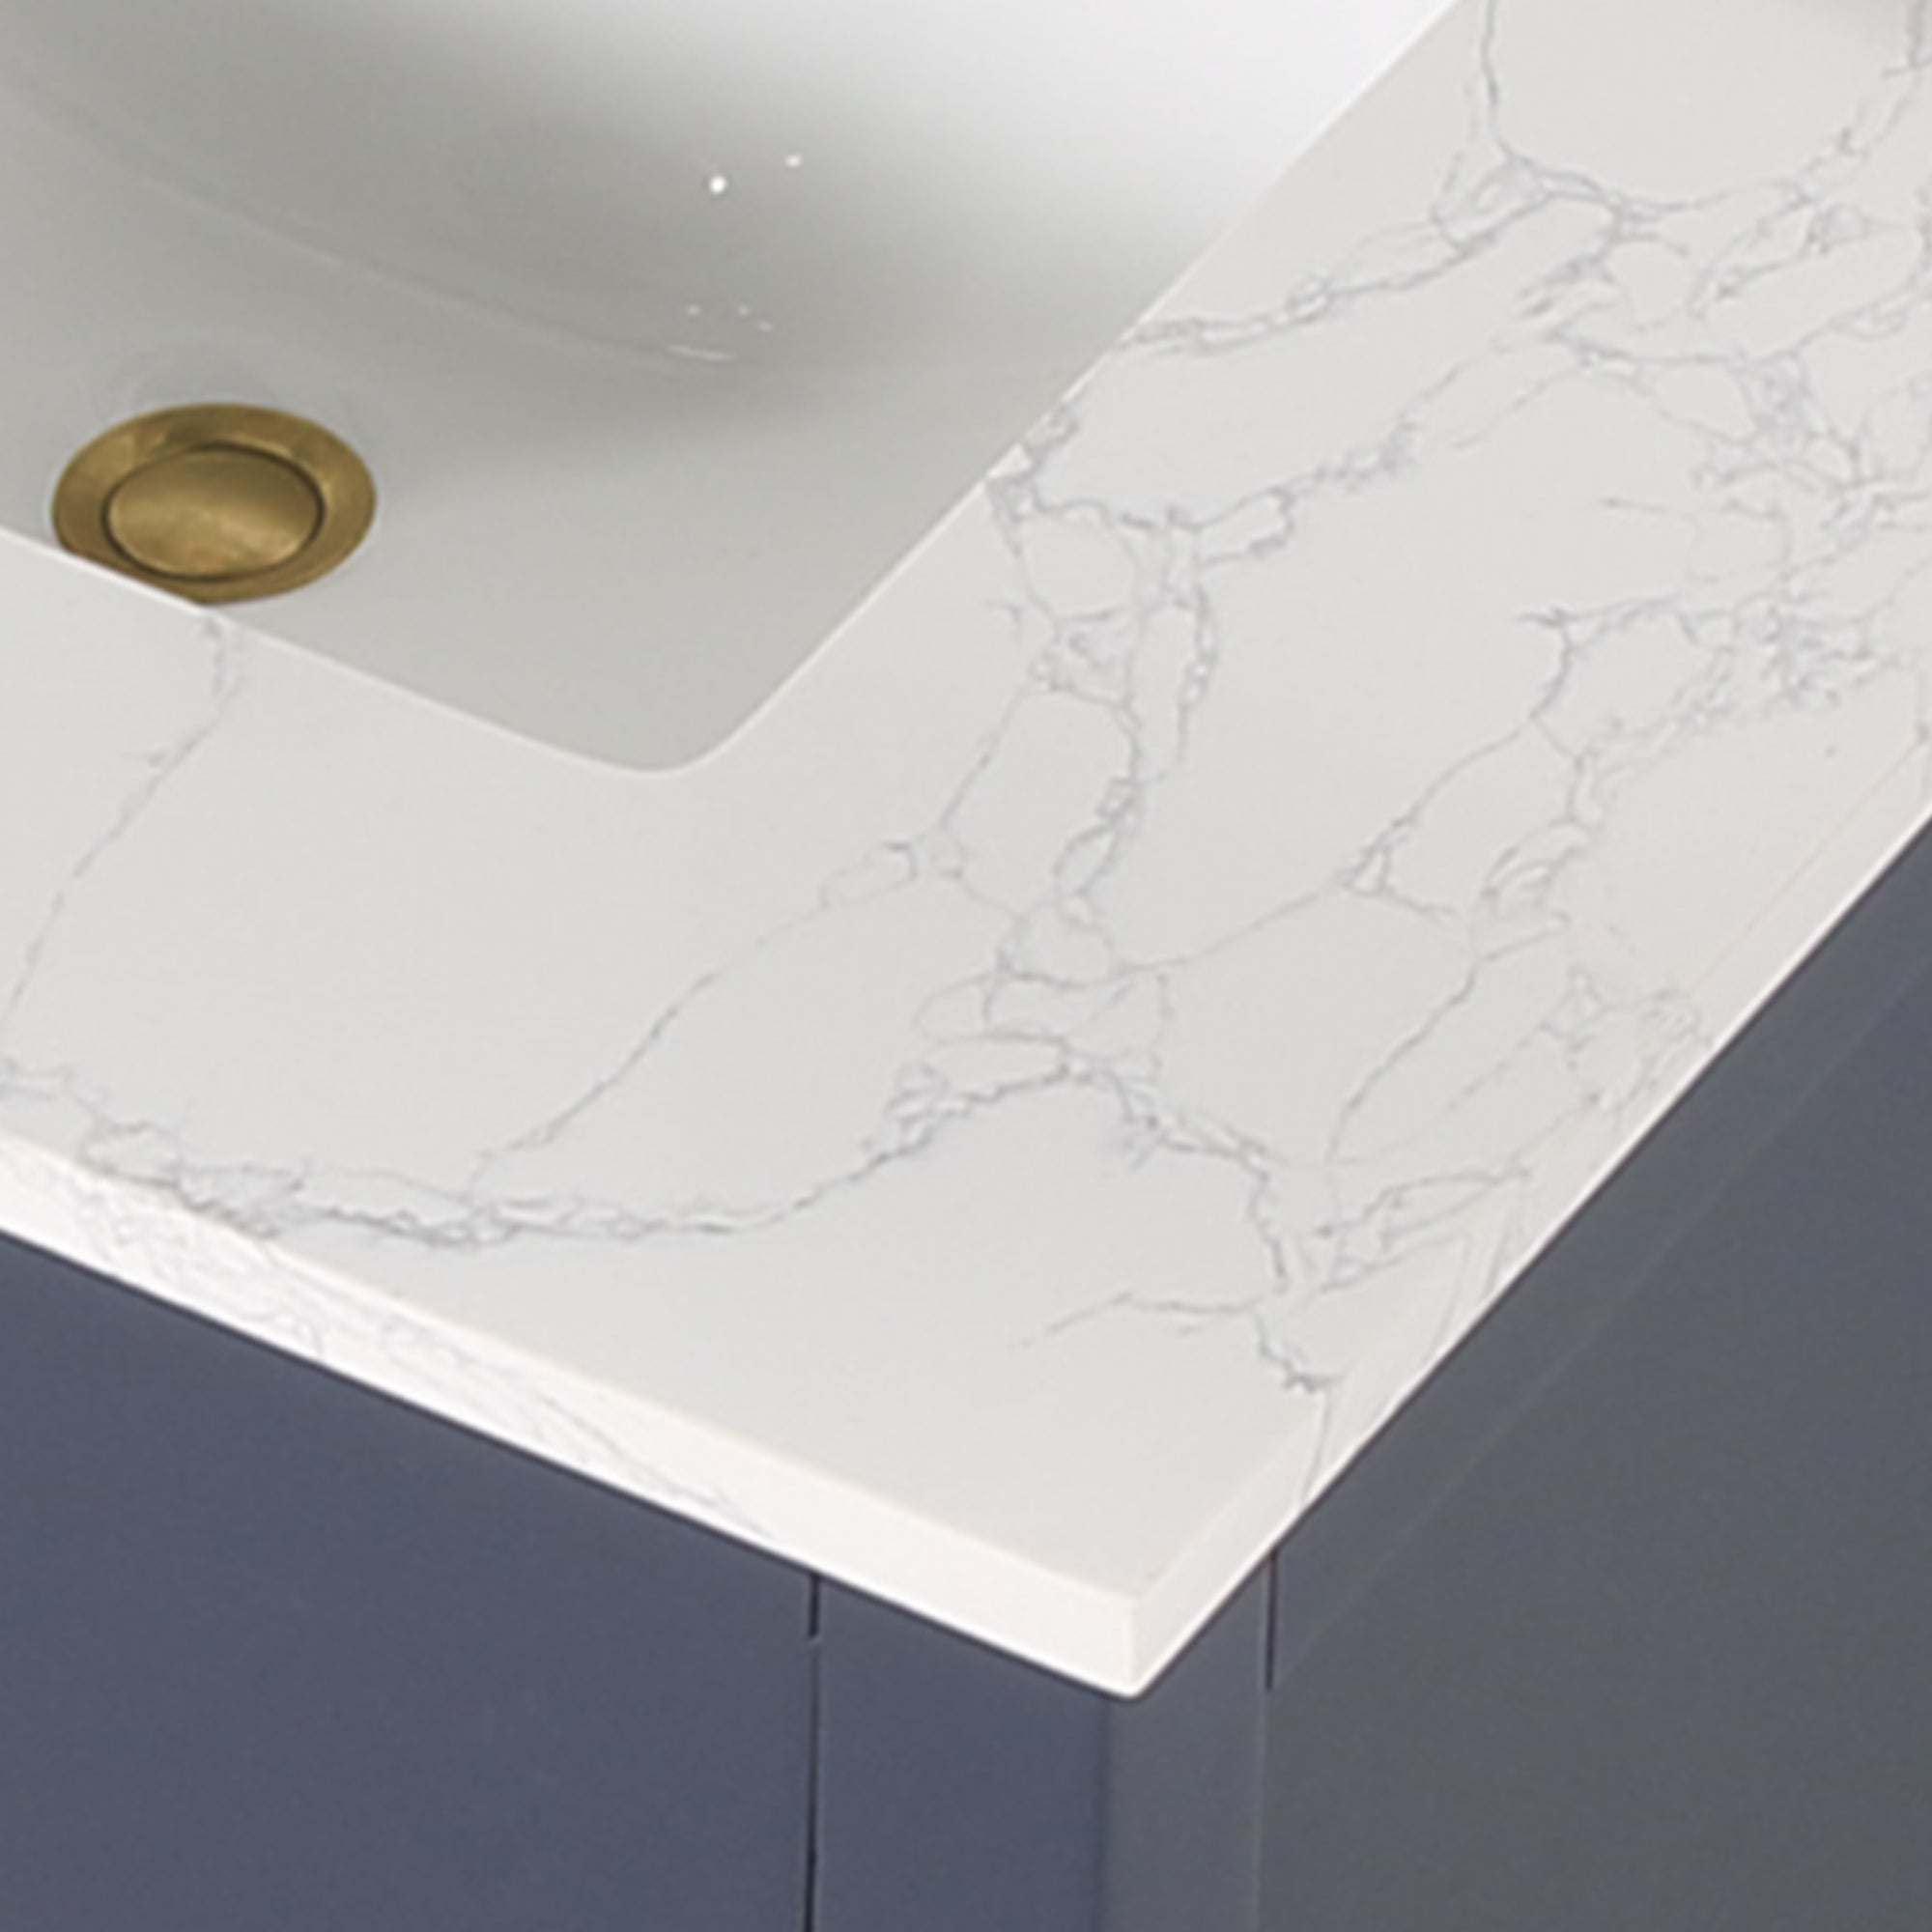 Gavino 30" Single Bathroom Vanity with Composite Stone Countertop